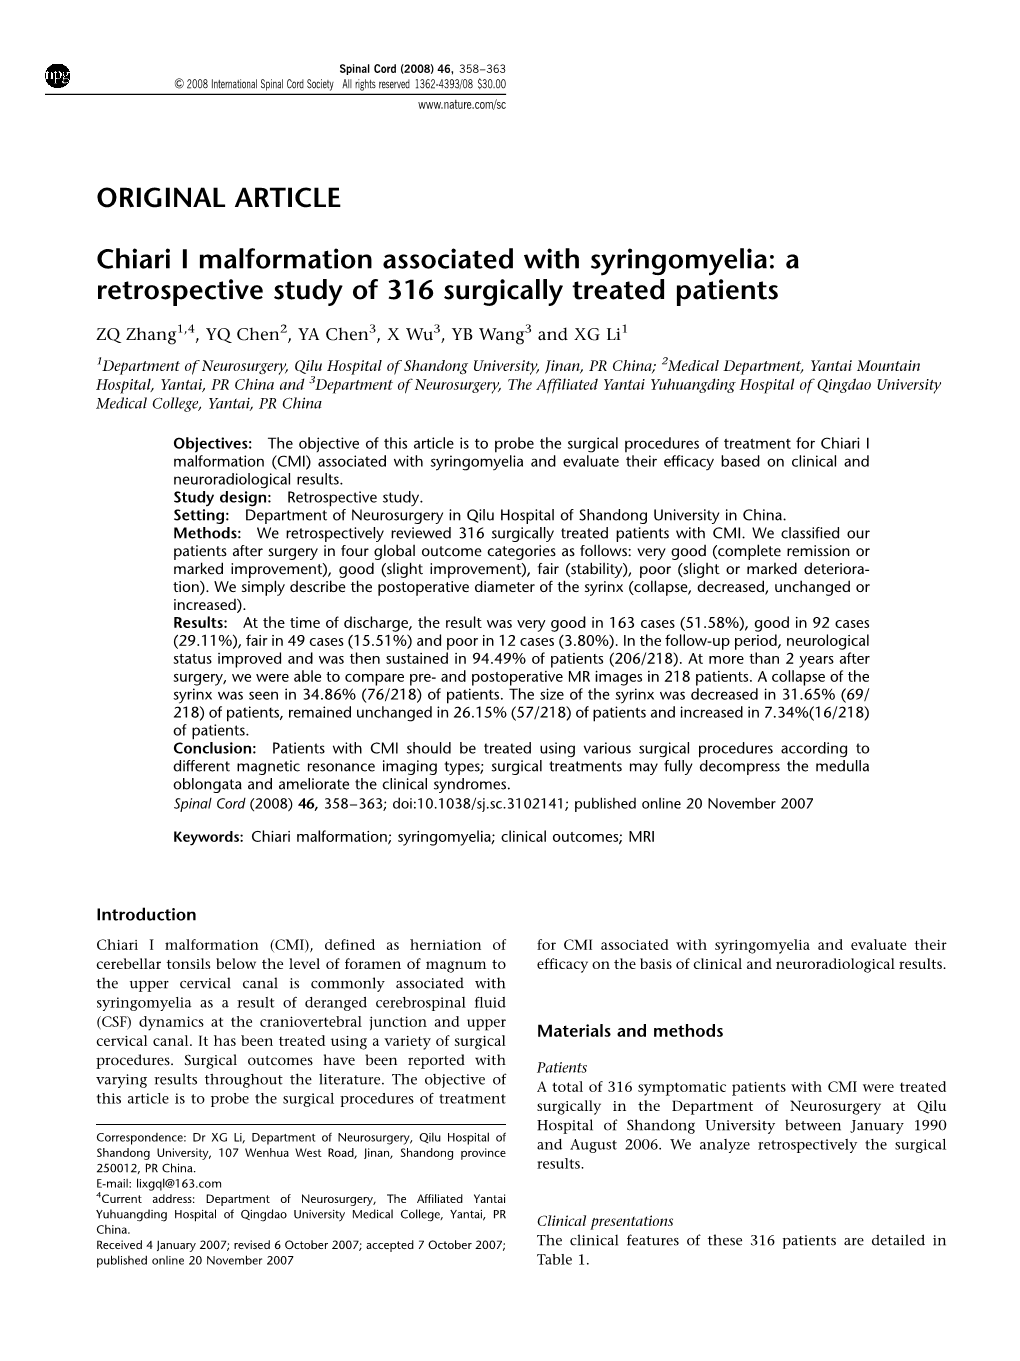 Chiari I Malformation Associated with Syringomyelia: a Retrospective Study of 316 Surgically Treated Patients